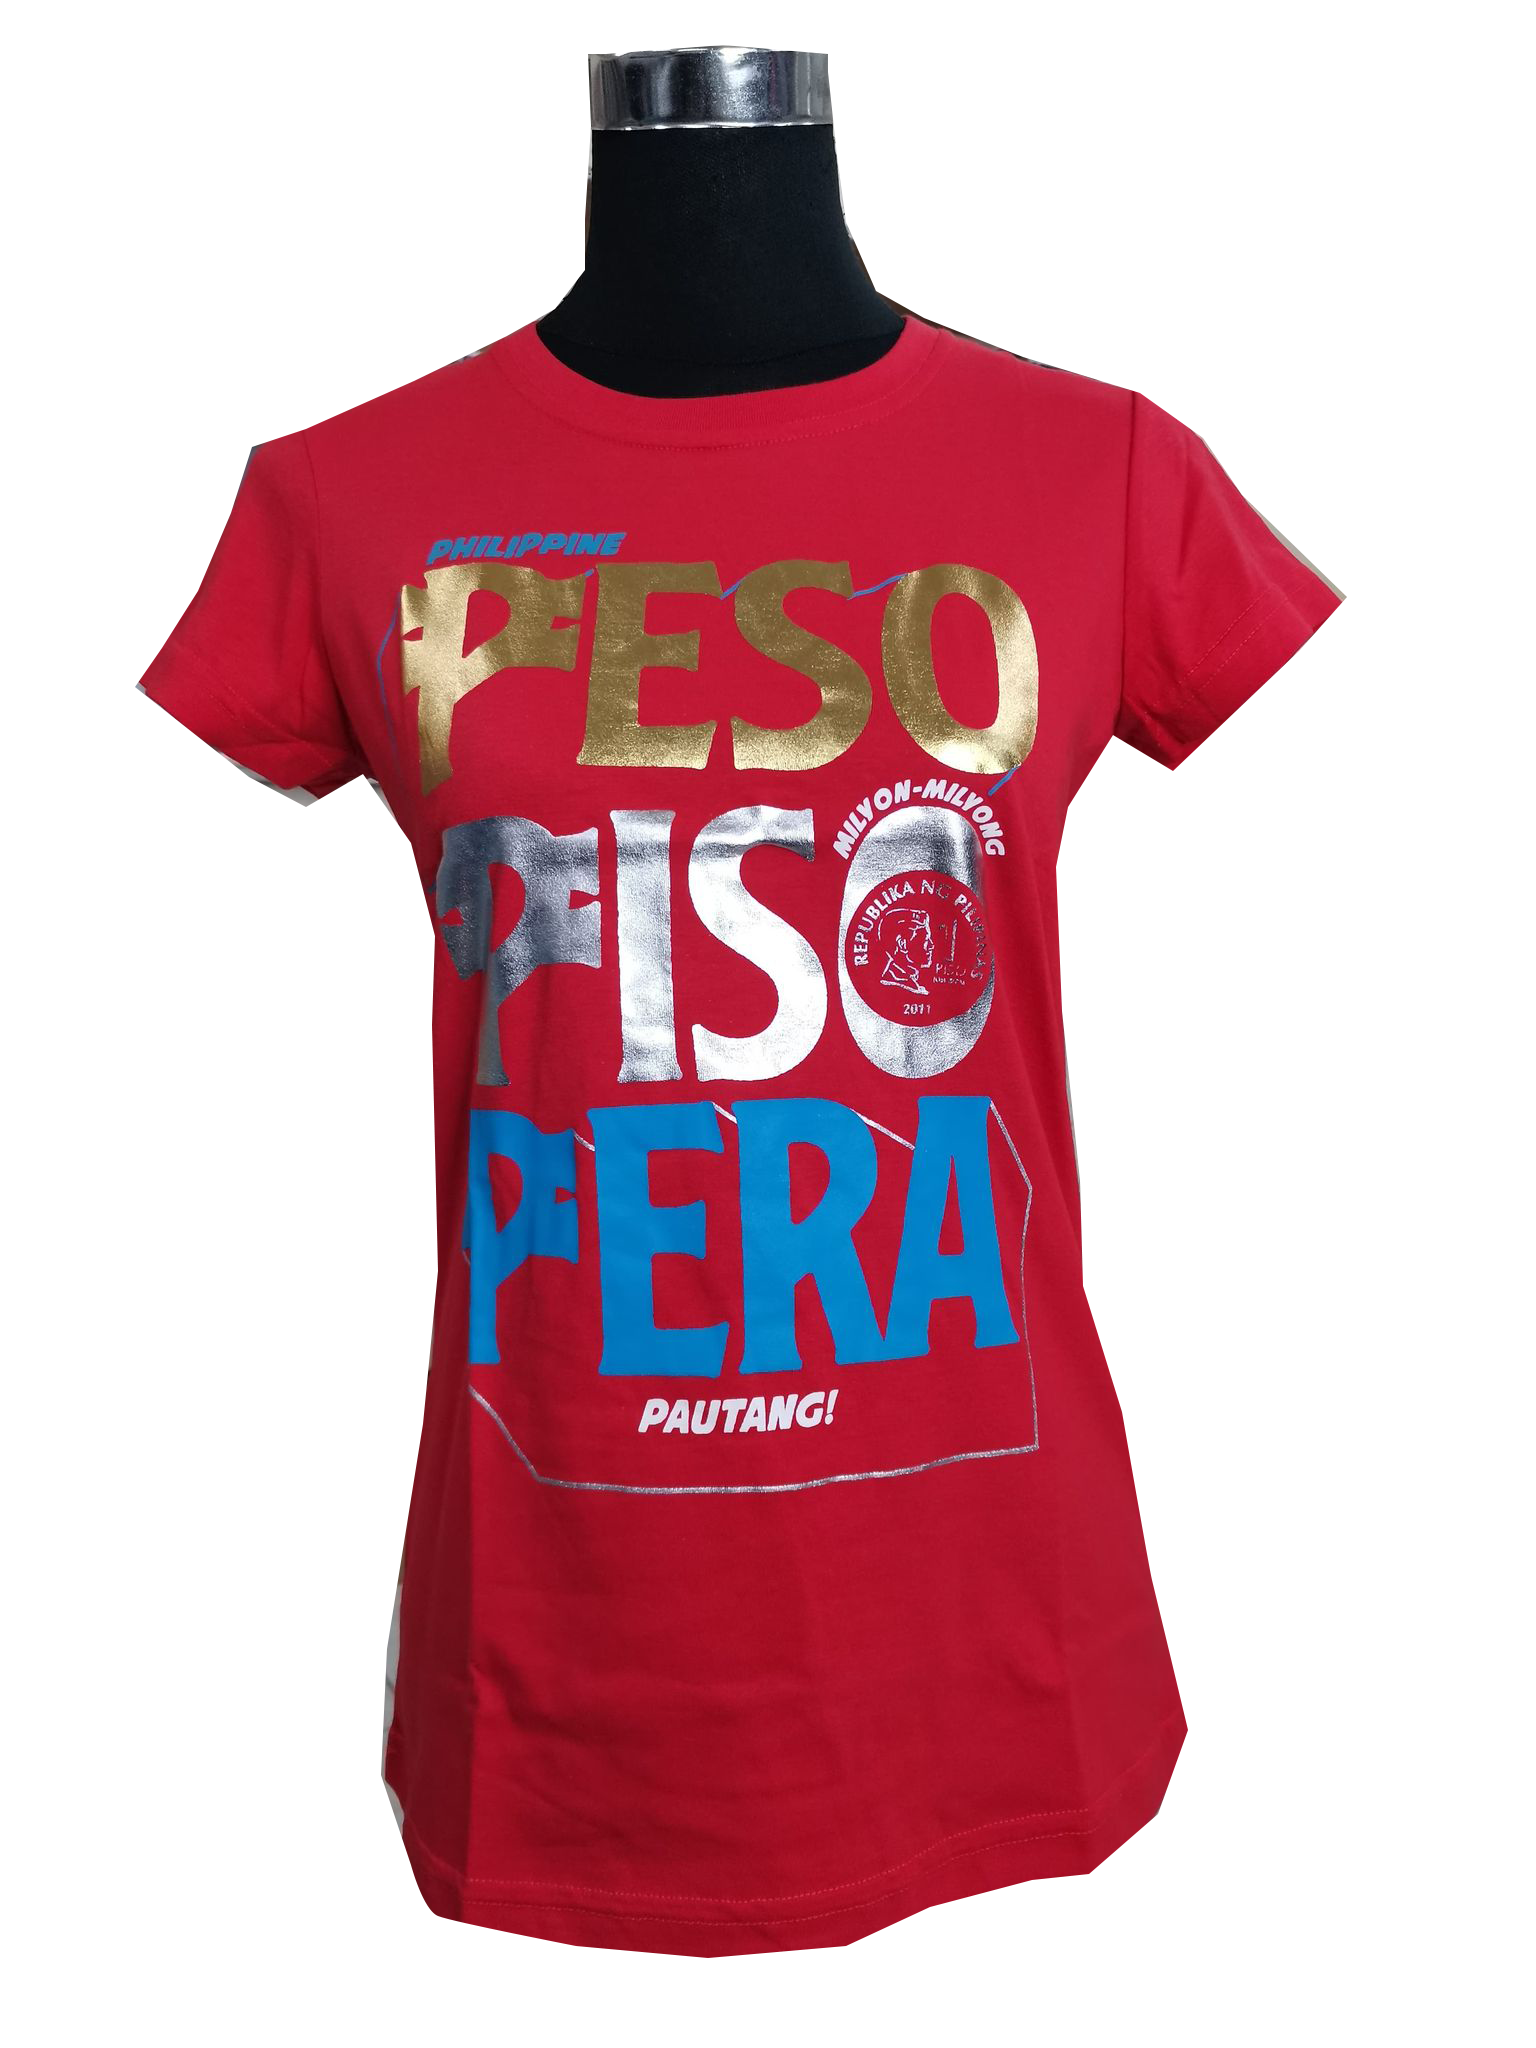 Peso Piso Pera T-shirt for Ladies